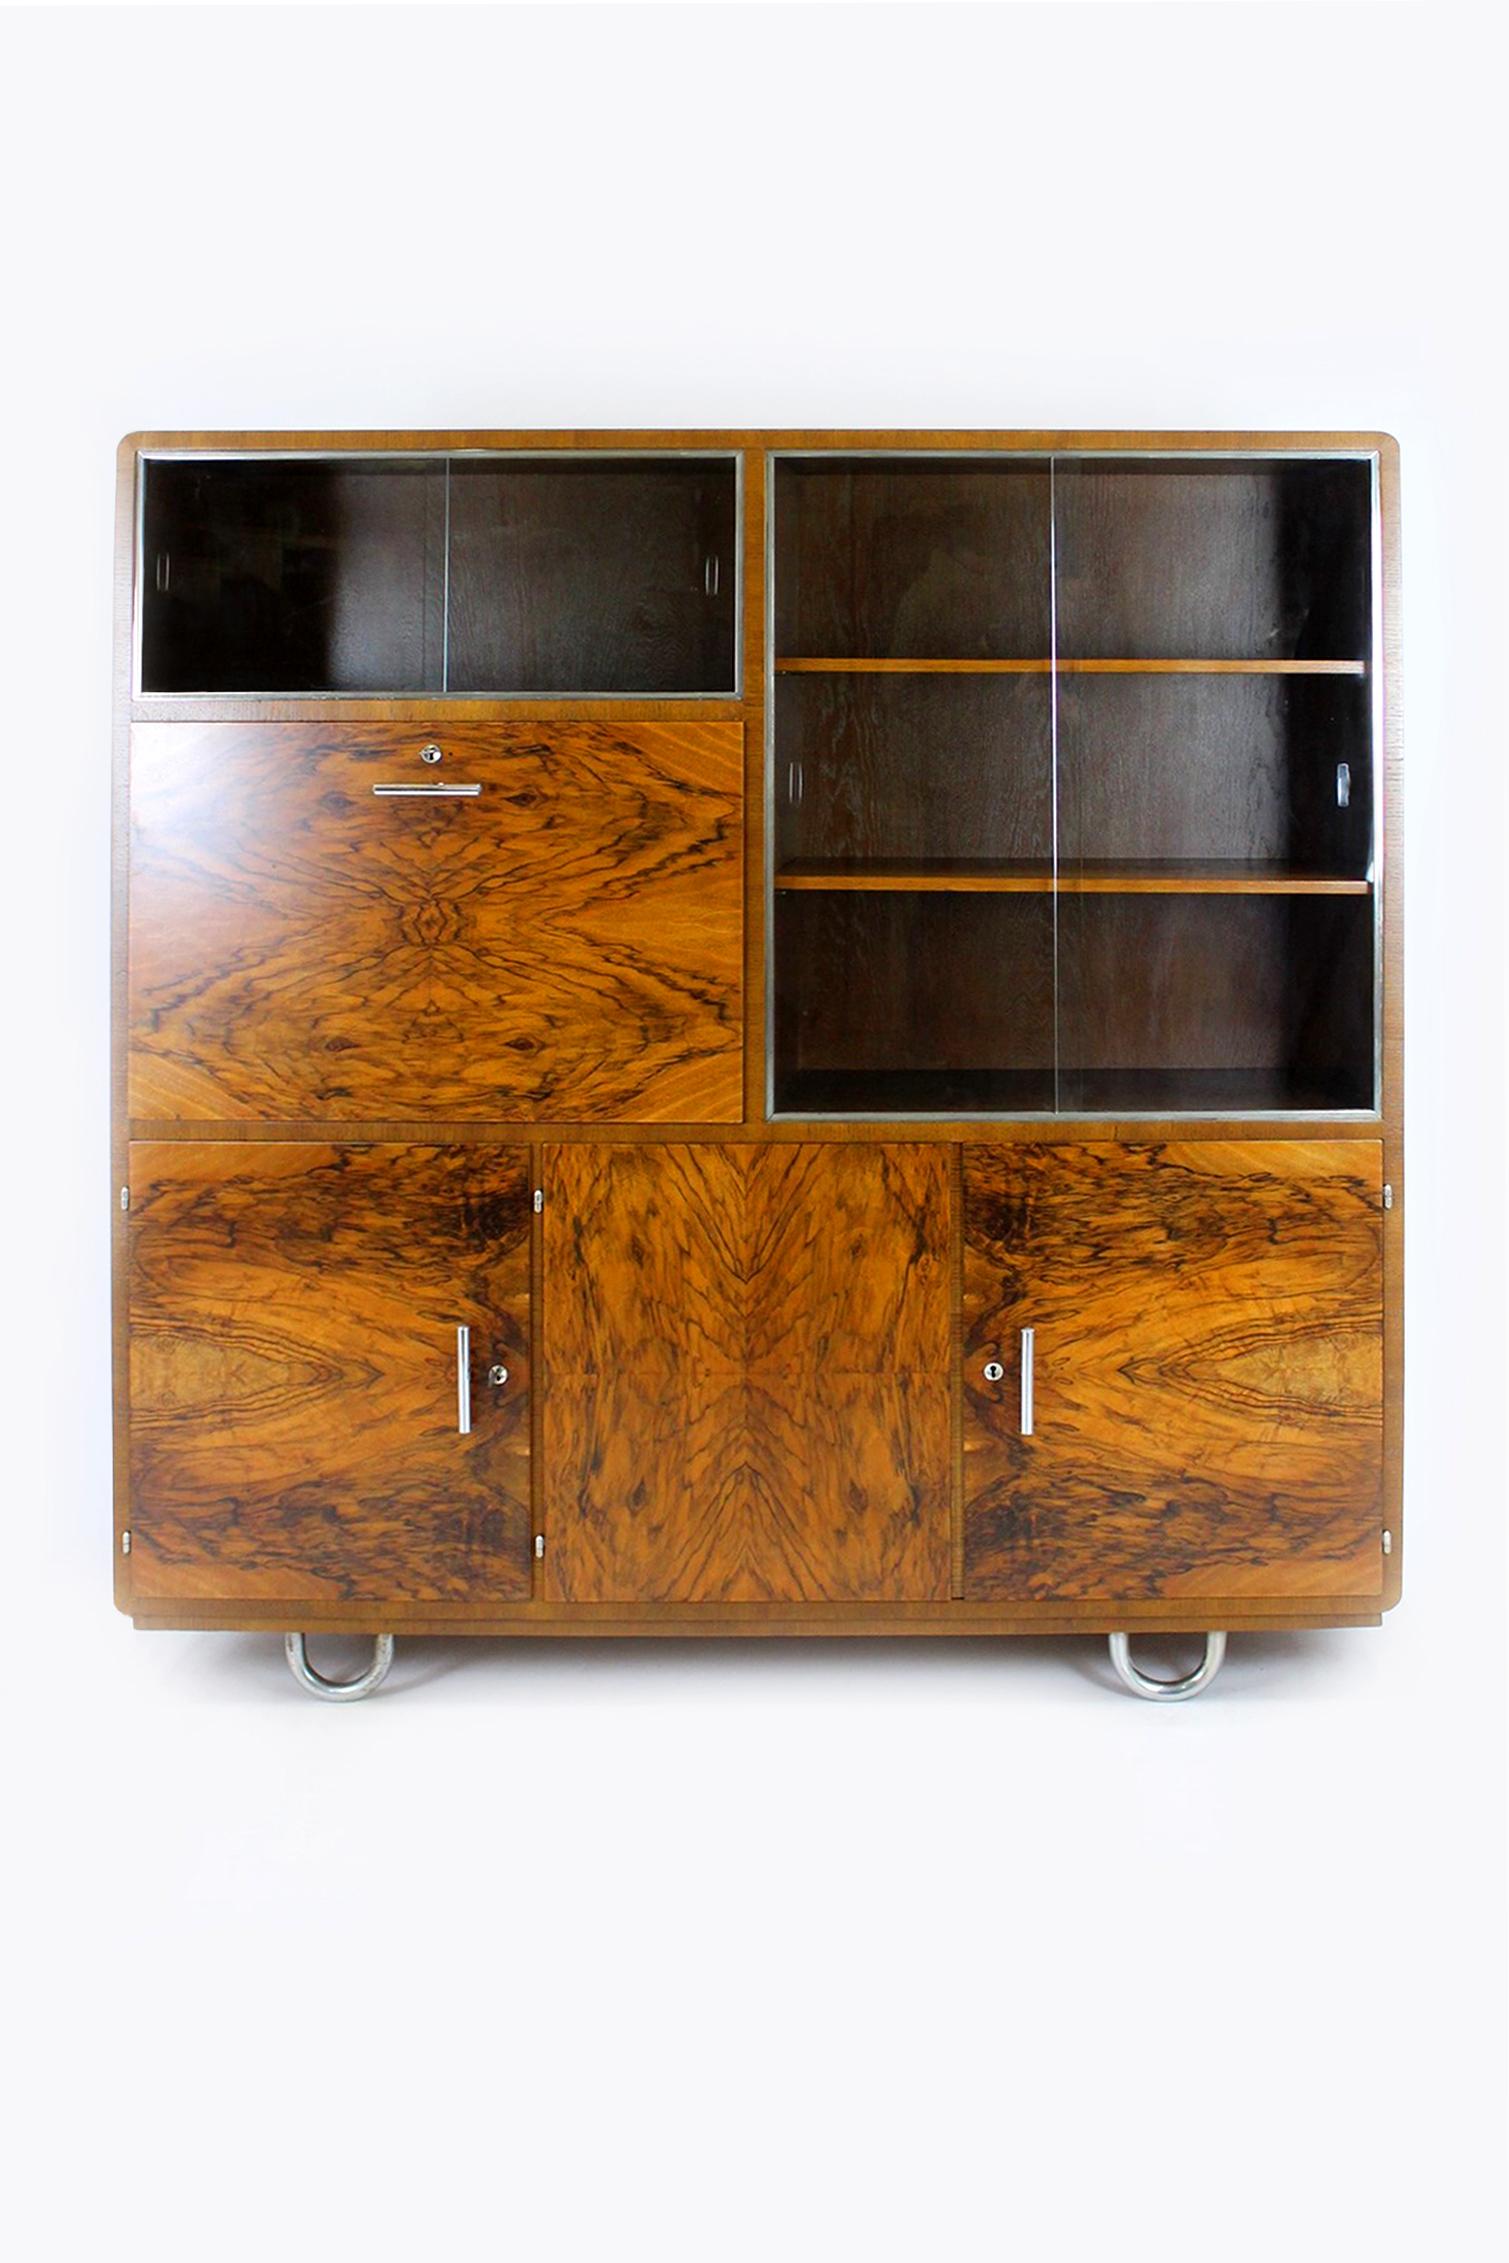 Bauhaus Tubular Steel Cupboard Cabinet with Secretary Desk by R. Slezak, 1930s For Sale 6